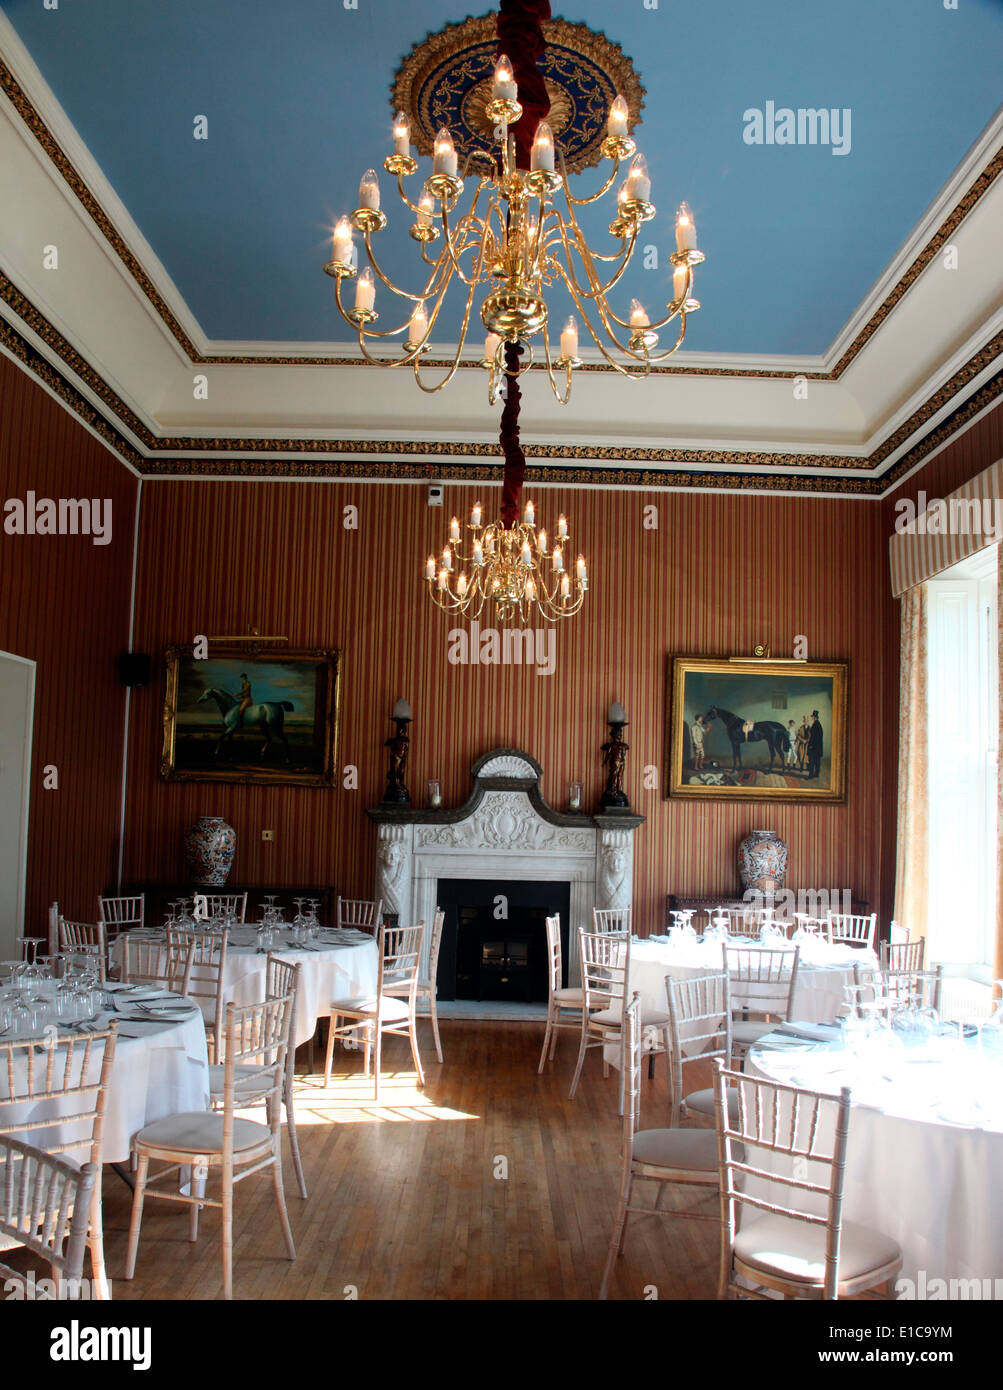 Virginia Park Lodge sala da pranzo, nella contea di Cavan, Irlanda Foto Stock